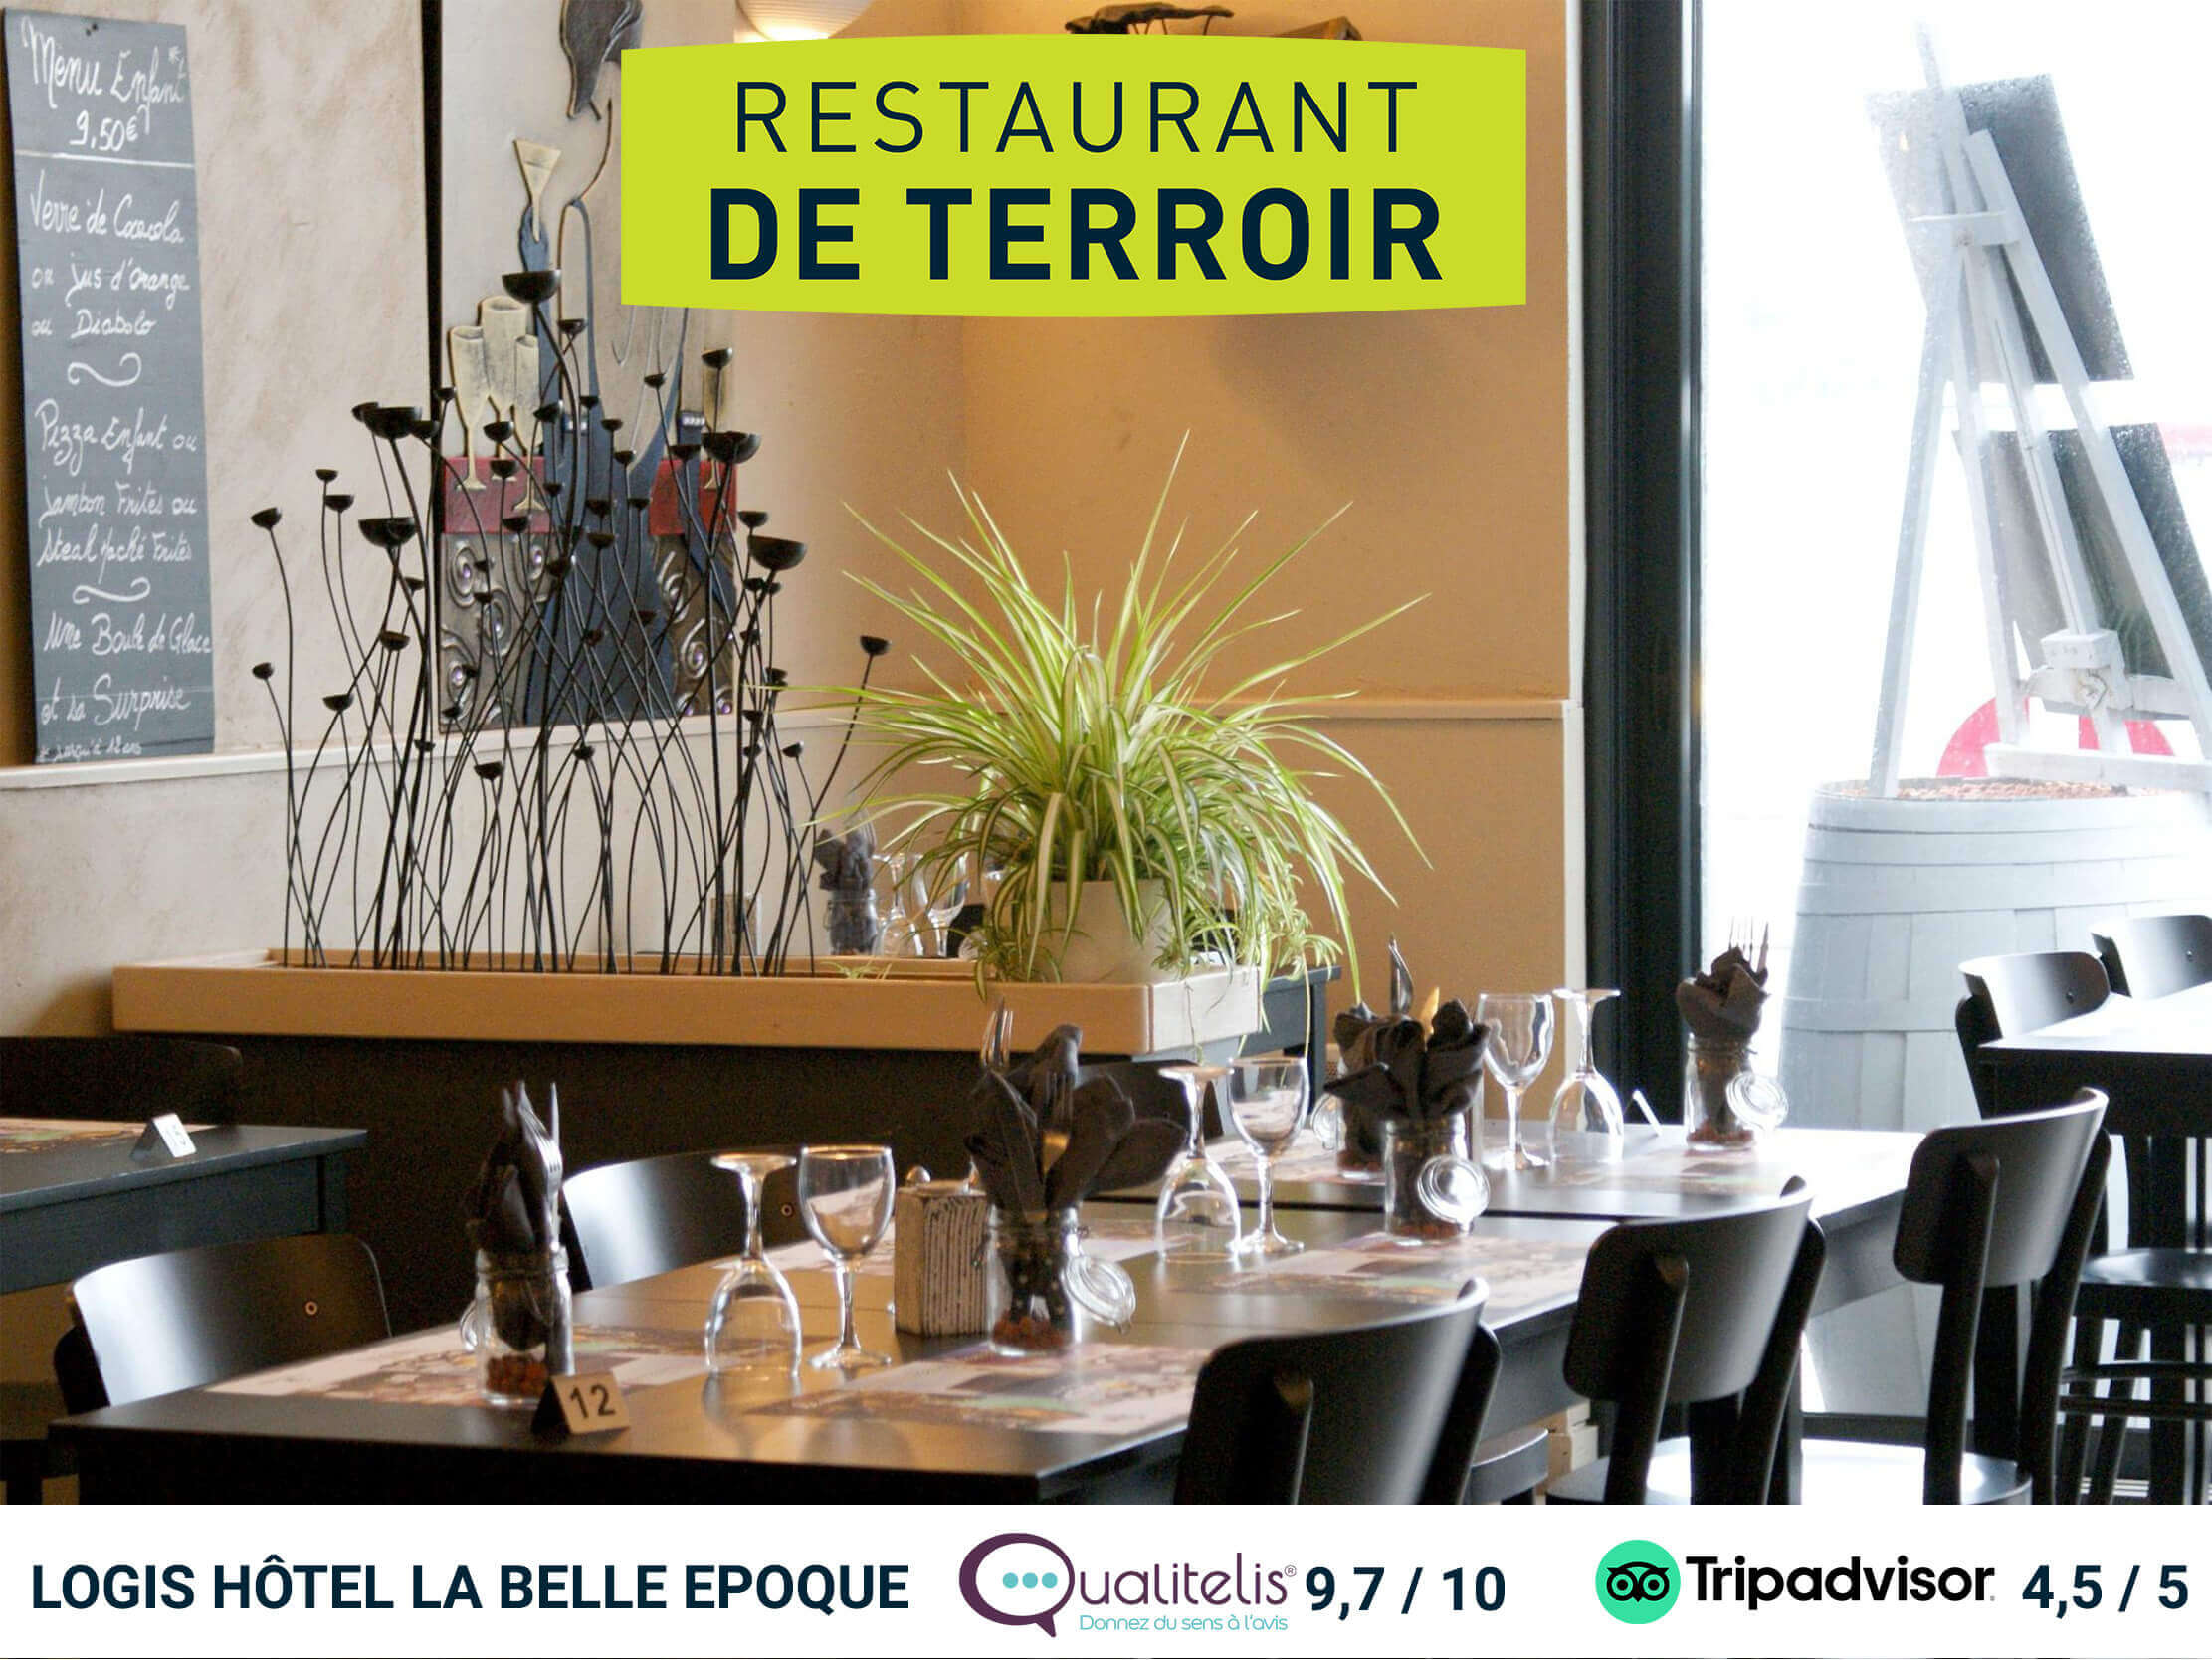 Restaurant de Terroir: REGIONAL CUISINE WITH A REALLY FRIENDLY FEEL.